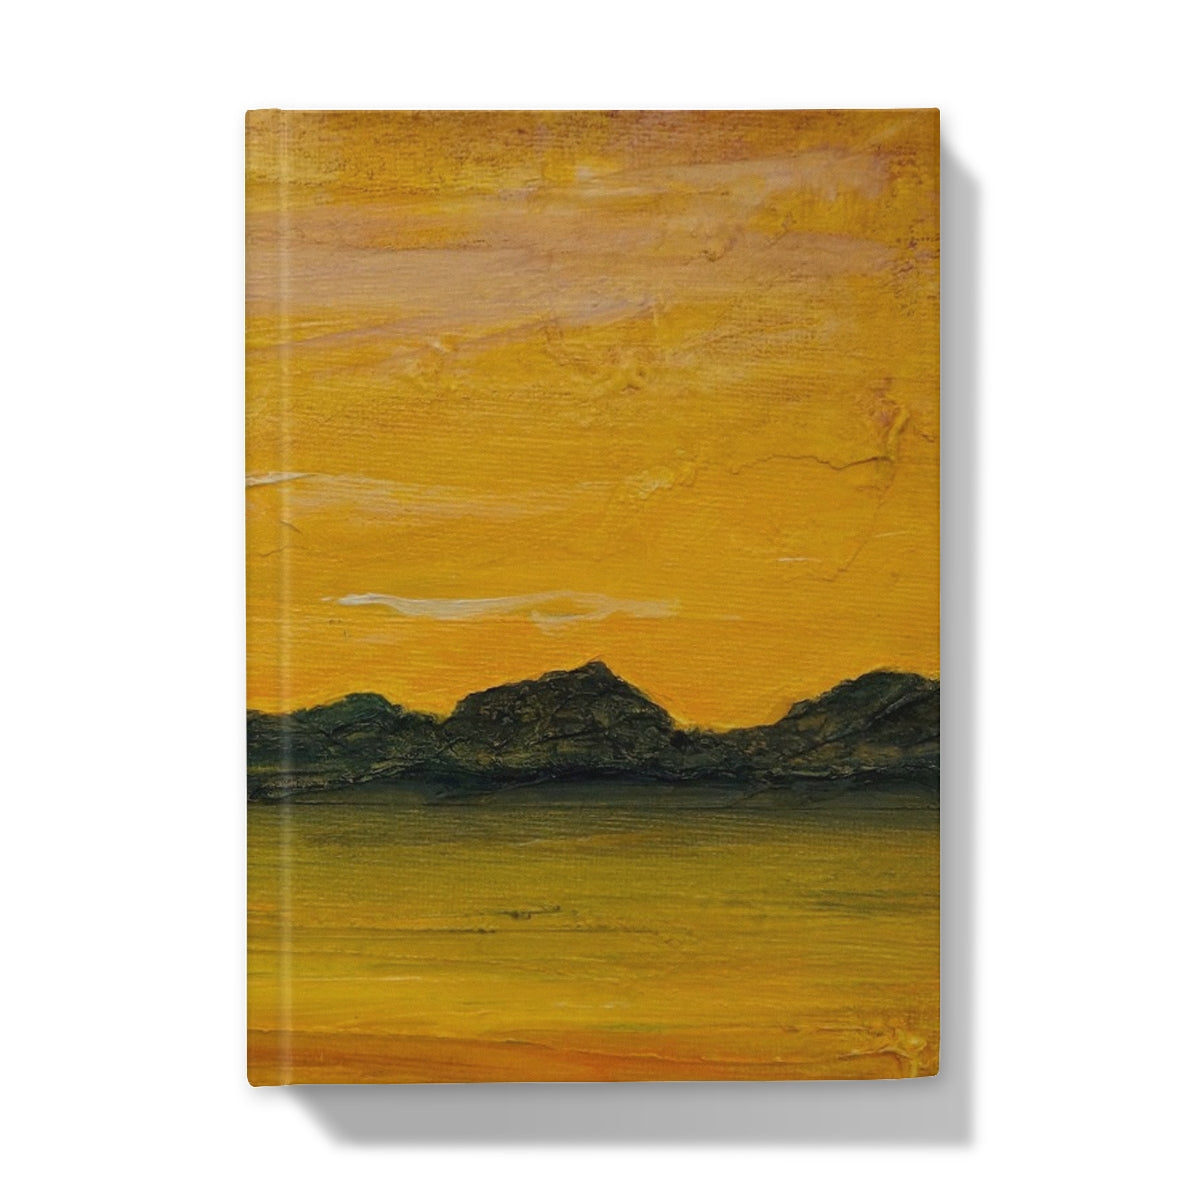 Jura Sunset Art Gifts Hardback Journal-Journals & Notebooks-Hebridean Islands Art Gallery-5"x7"-Plain-Paintings, Prints, Homeware, Art Gifts From Scotland By Scottish Artist Kevin Hunter